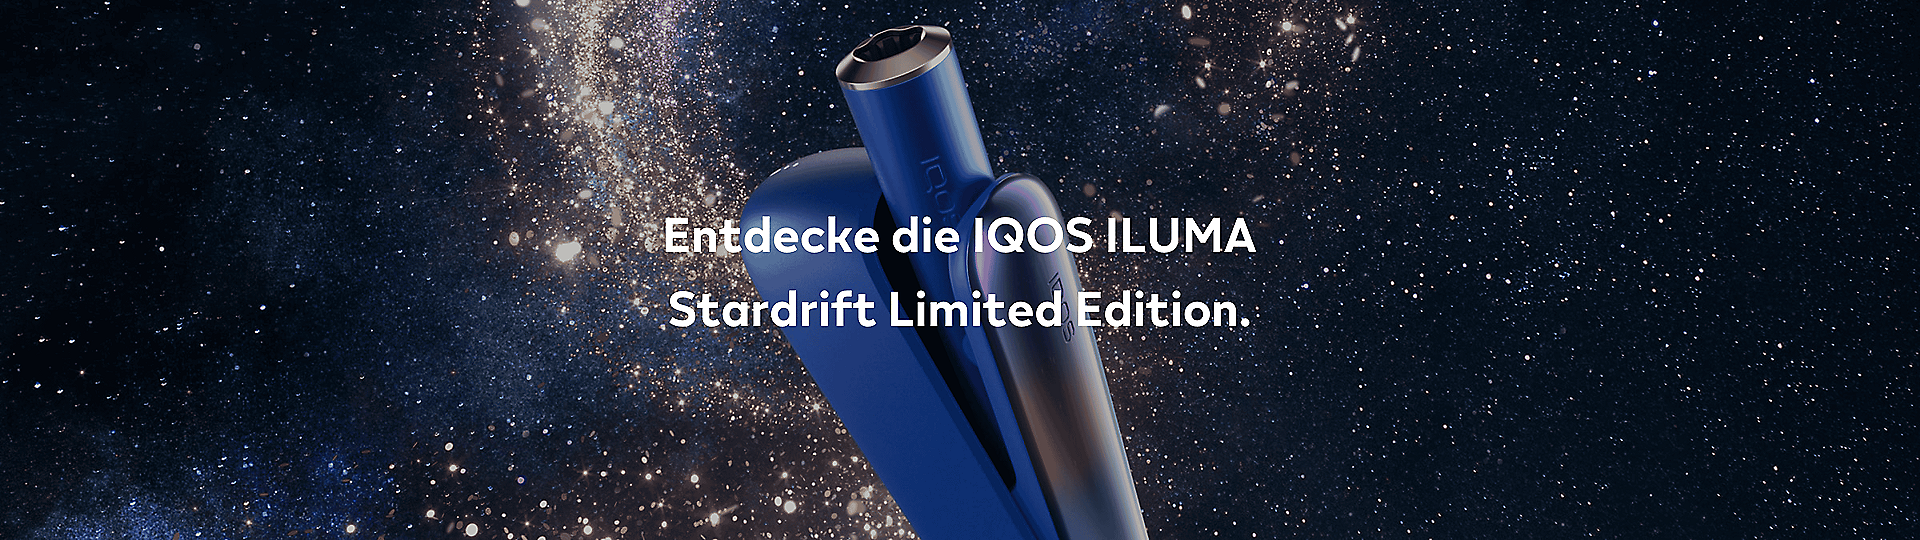 Discover ILUMA ONE Stardrift Limited Edition